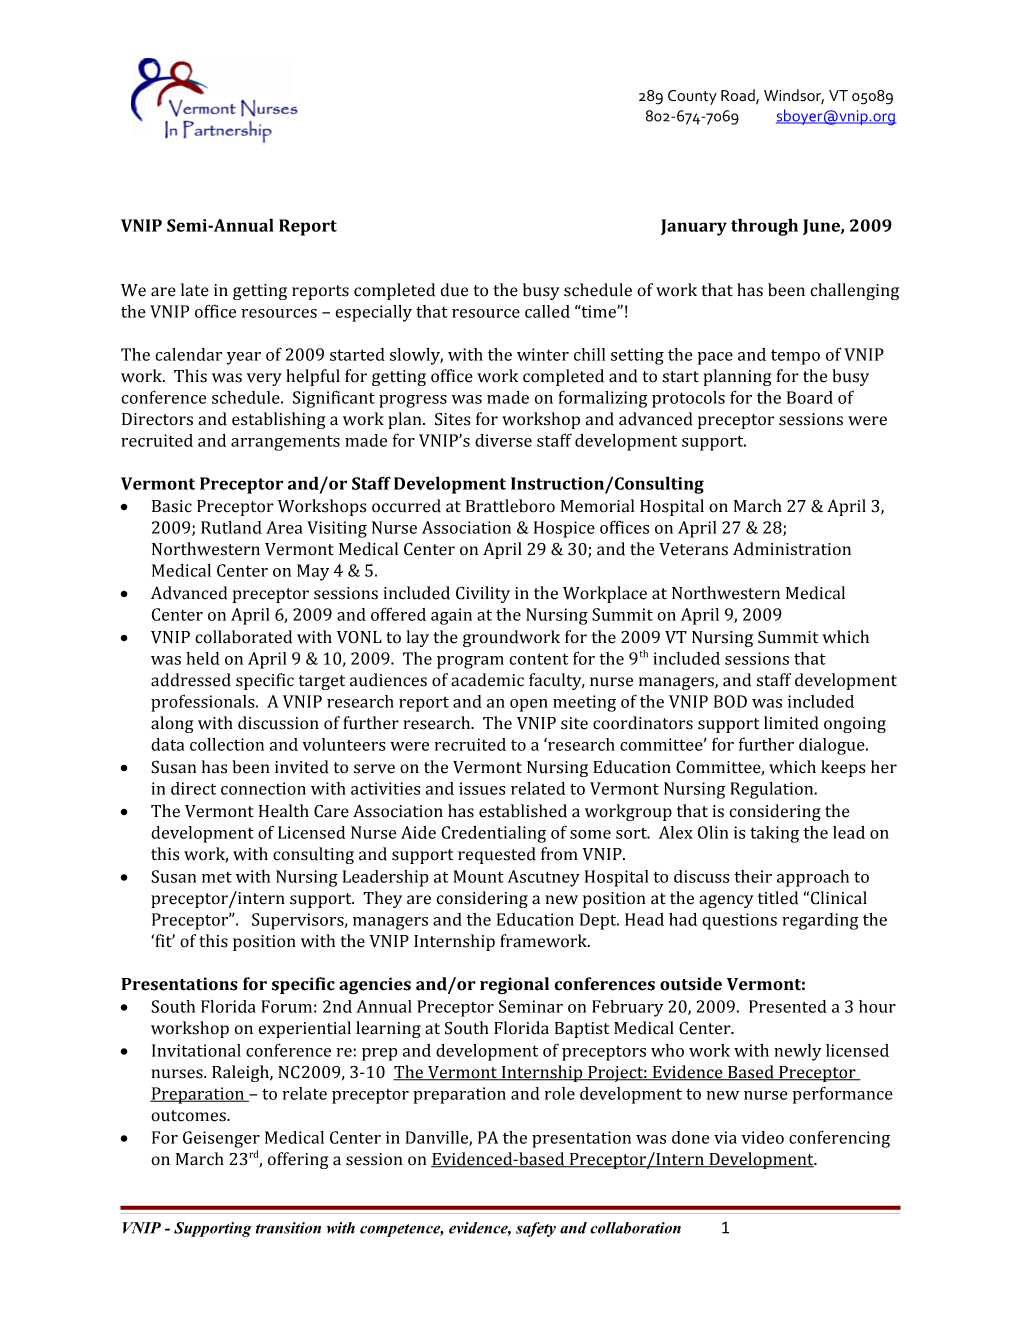 VNIP Semi-Annual Report January Through June, 2009